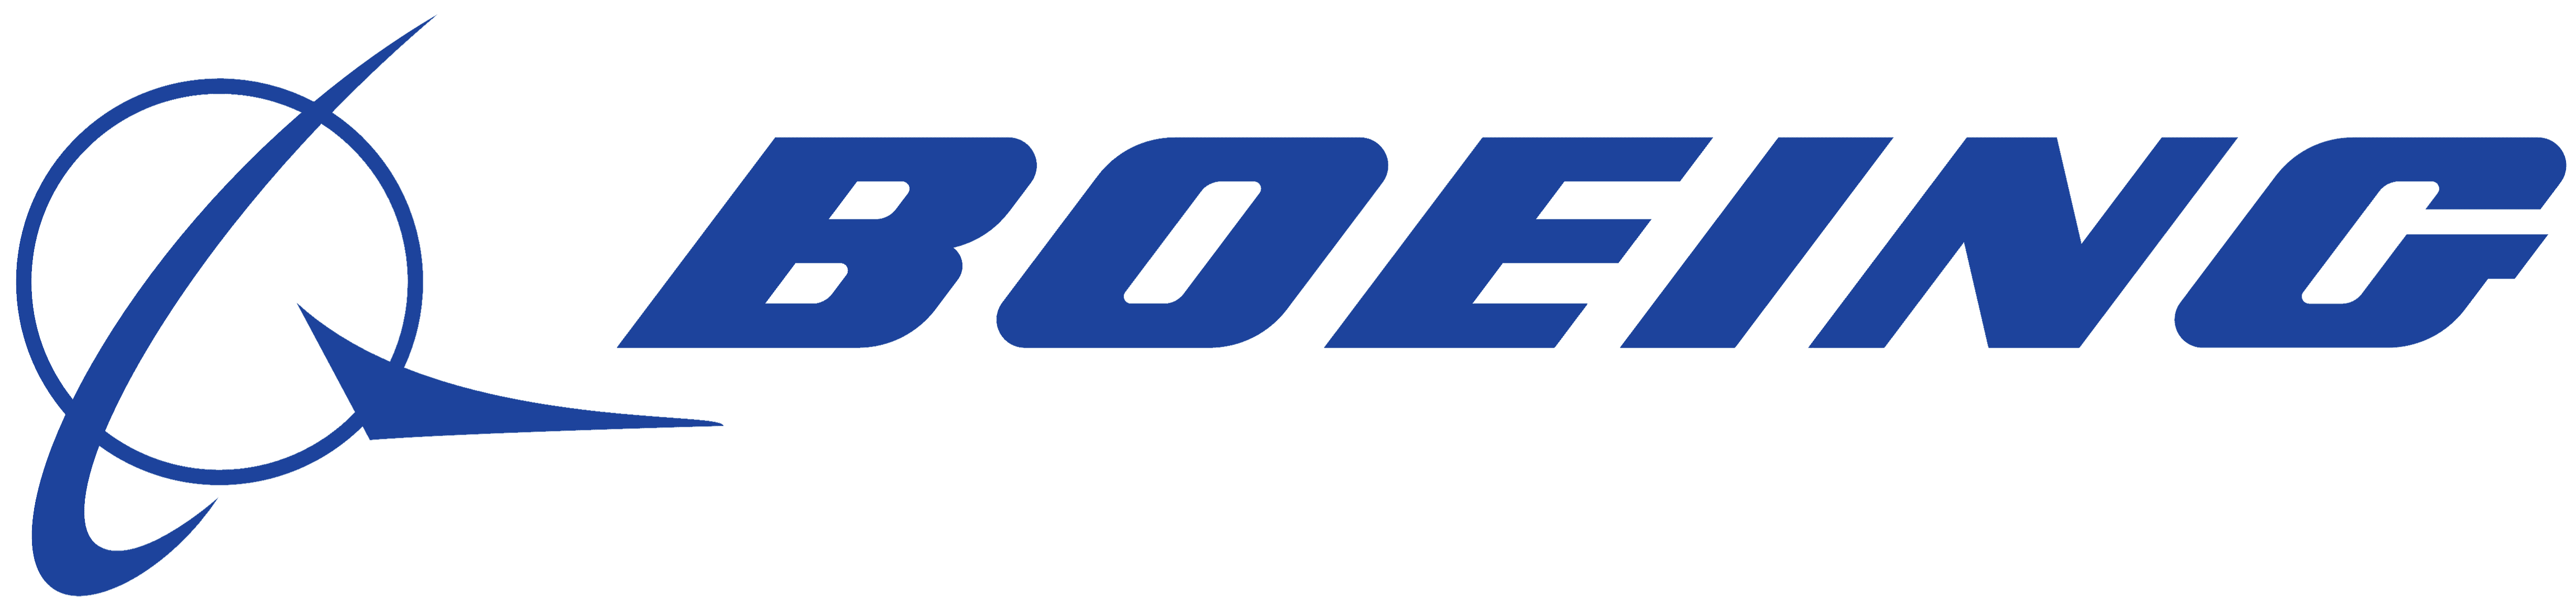 Logo Boeing (Boeing Capital Corporation)